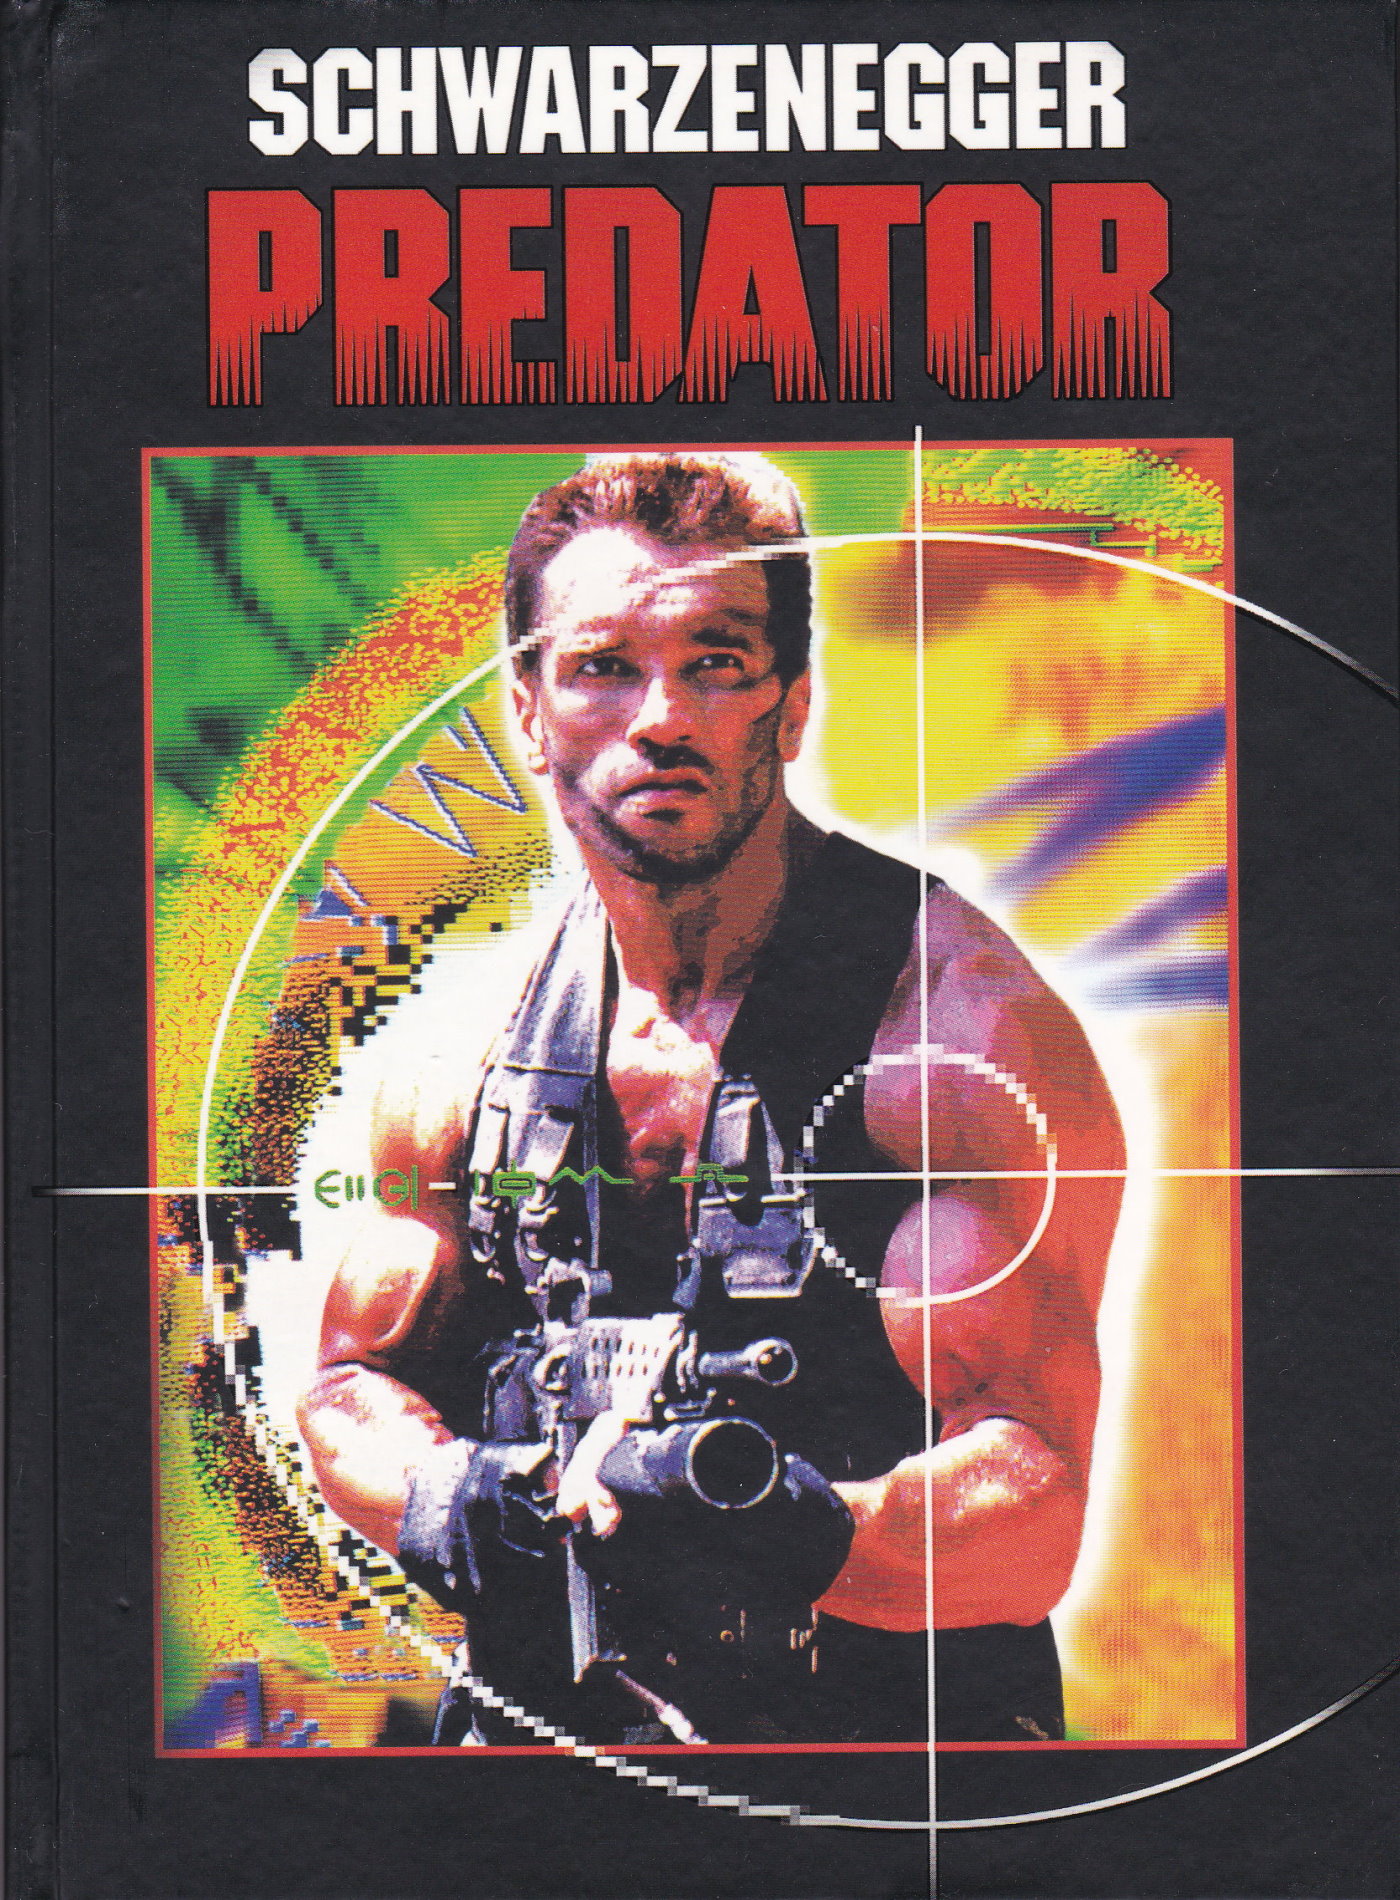 Cover - Predator.jpg